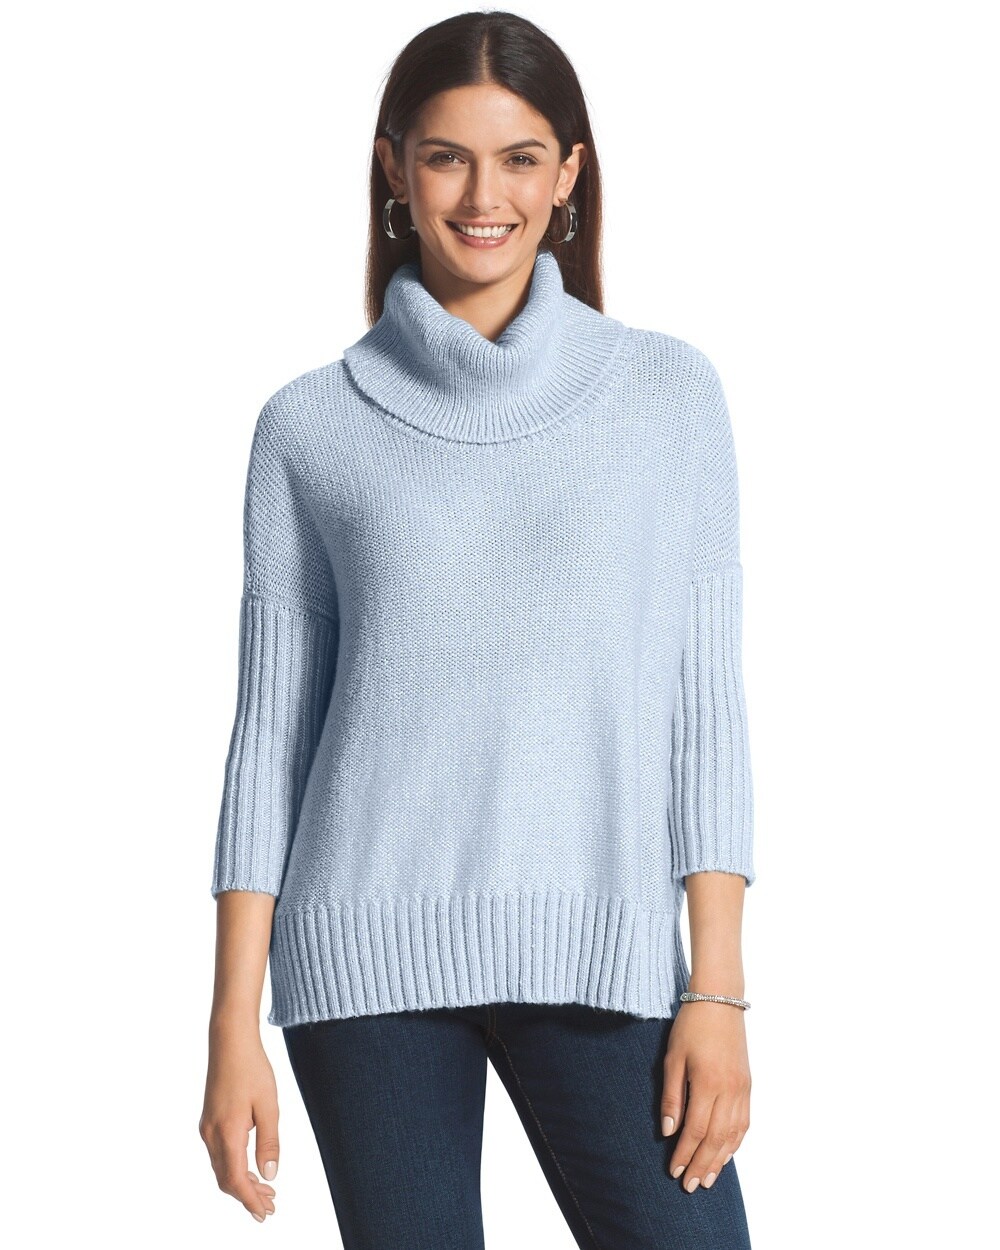 Celine Cowl Neck Sweater in Blue Diamond